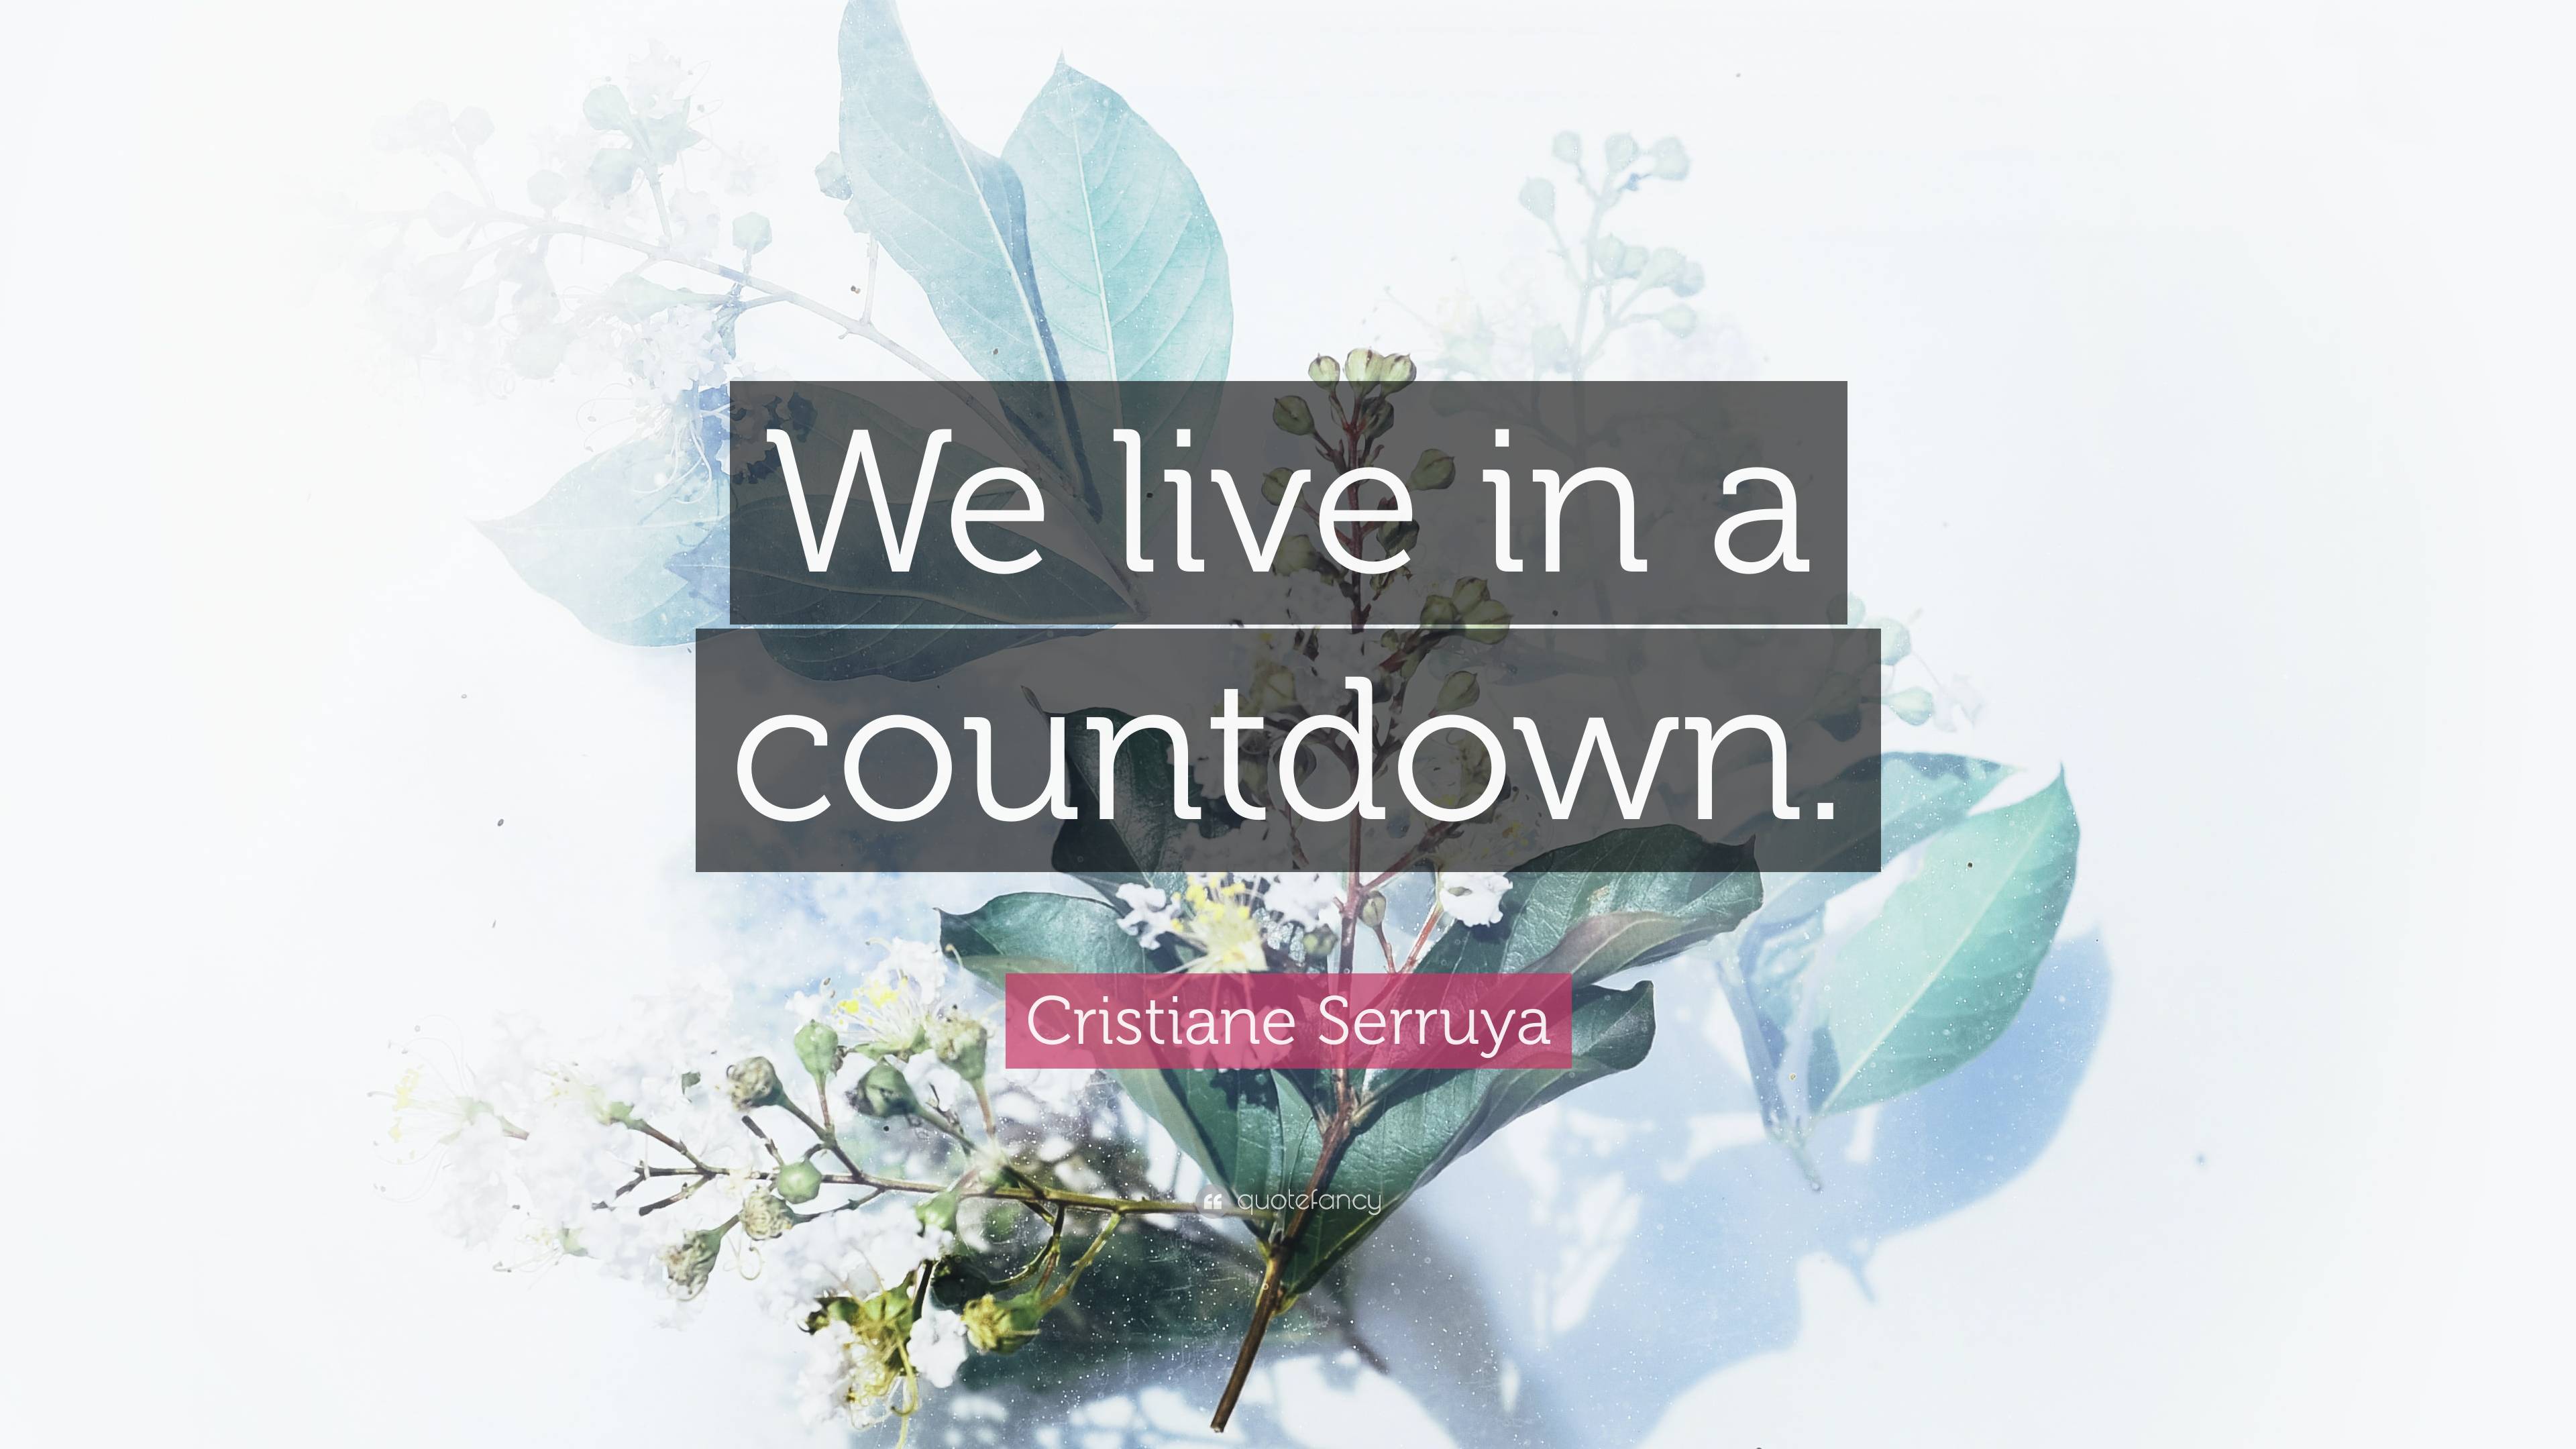 Cristiane Serruya Quote: “We live in a countdown.”